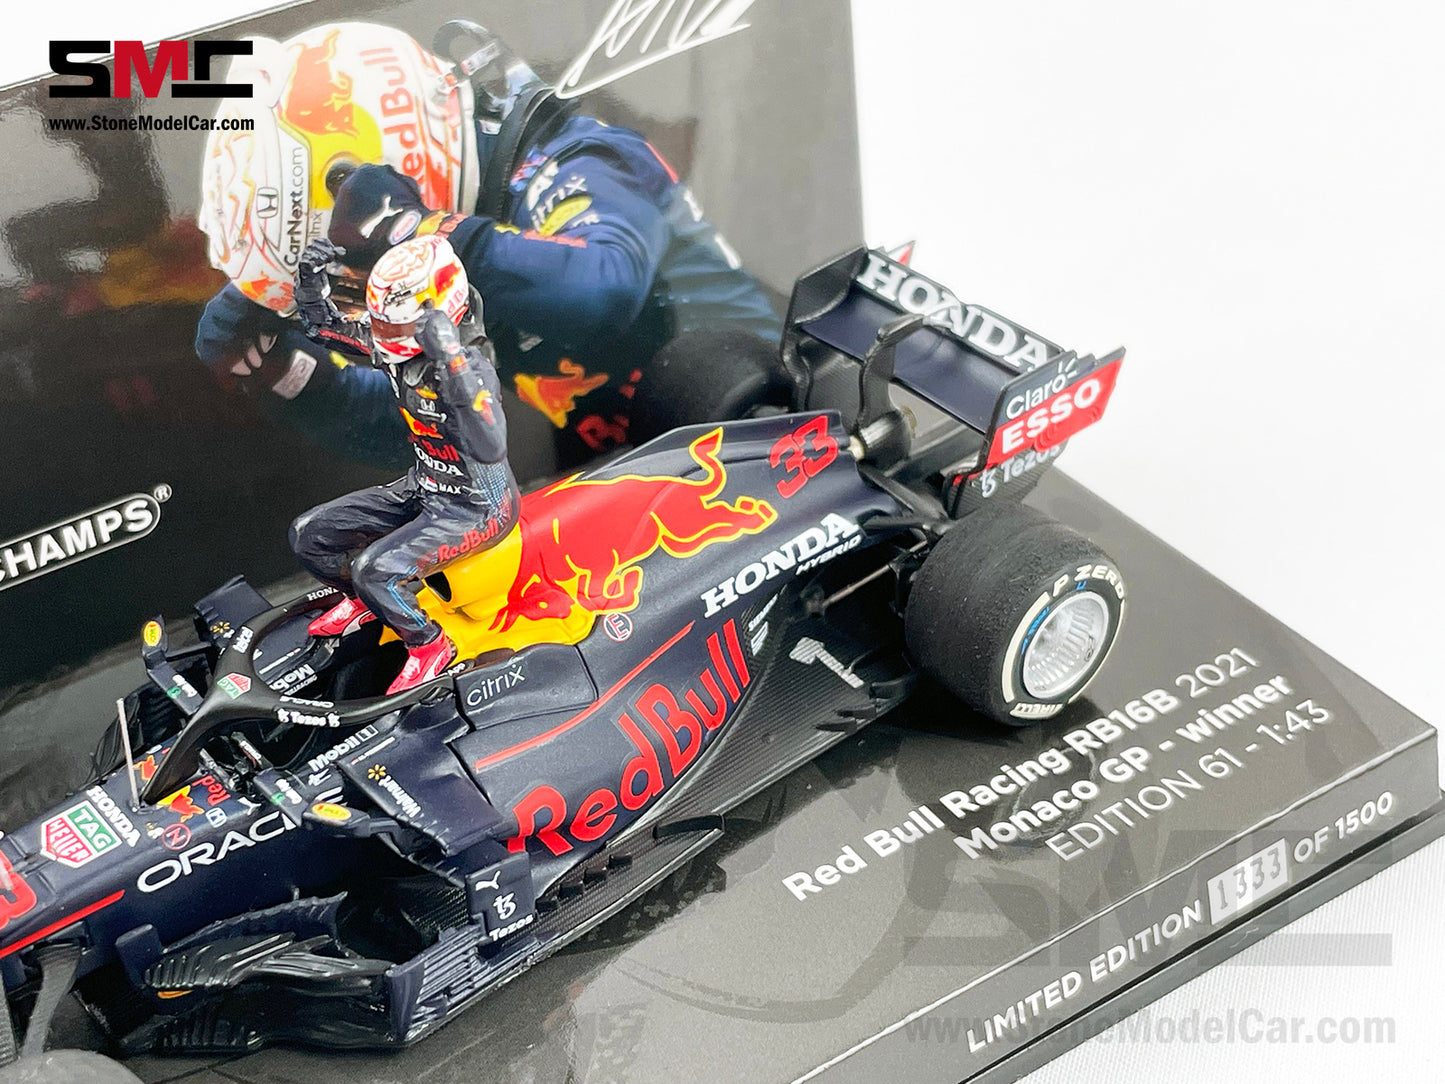 2021 F1 World Champion #33 Max Verstappen Red Bull RB16B Monaco GP 1:43 MINICHAMPS with Figure